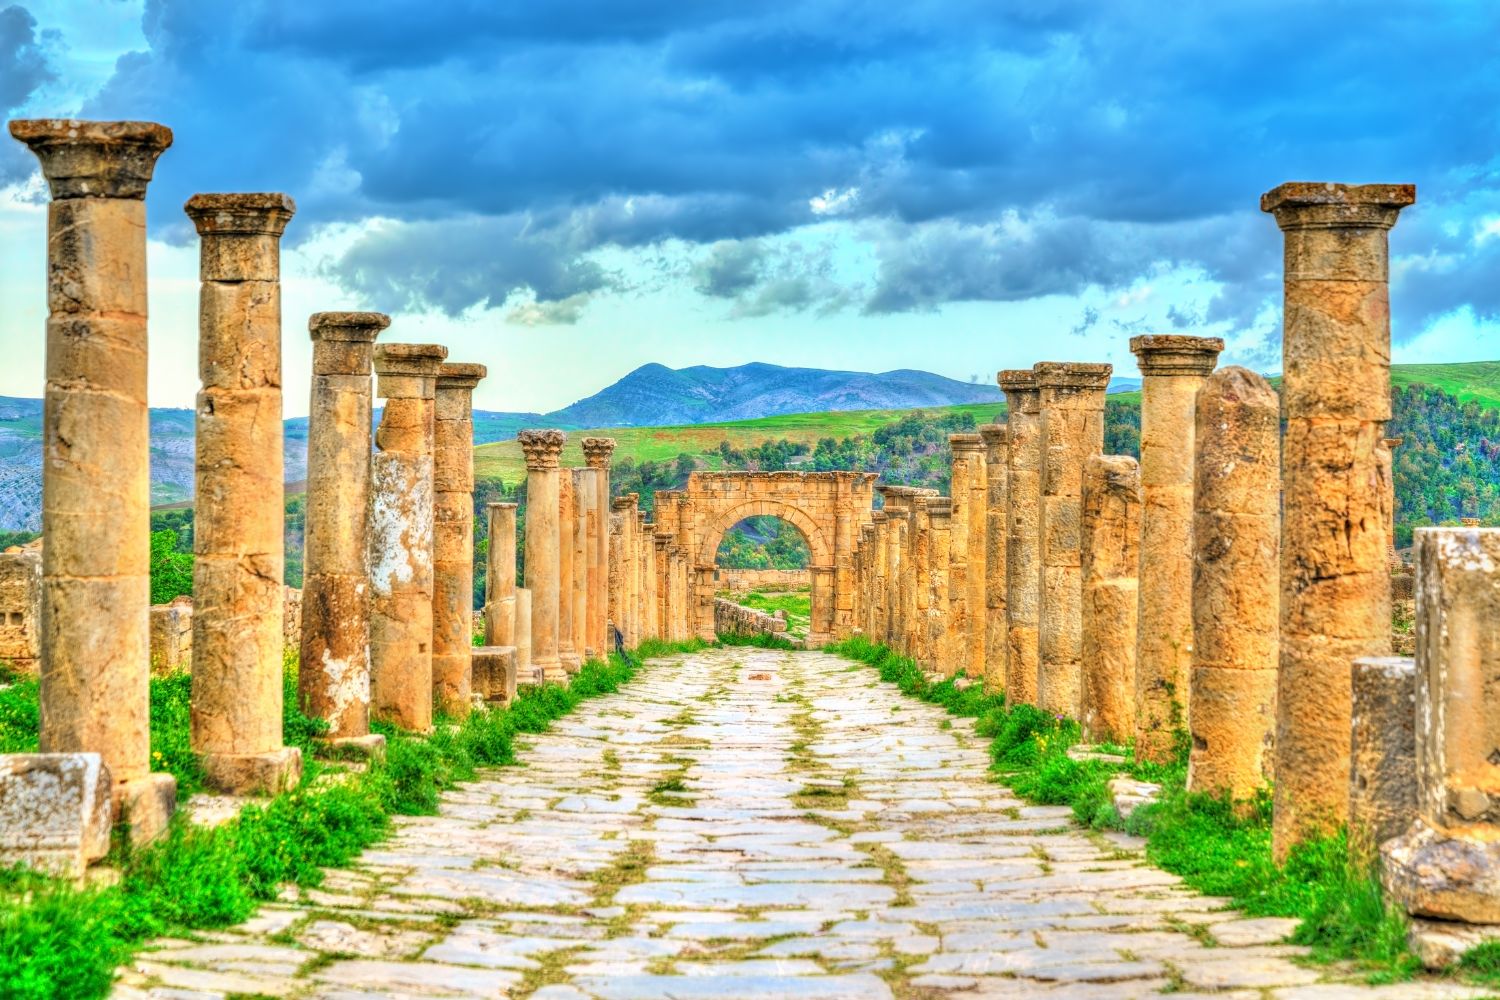 Algeria Tour Guide Roman Ruins of Djemila